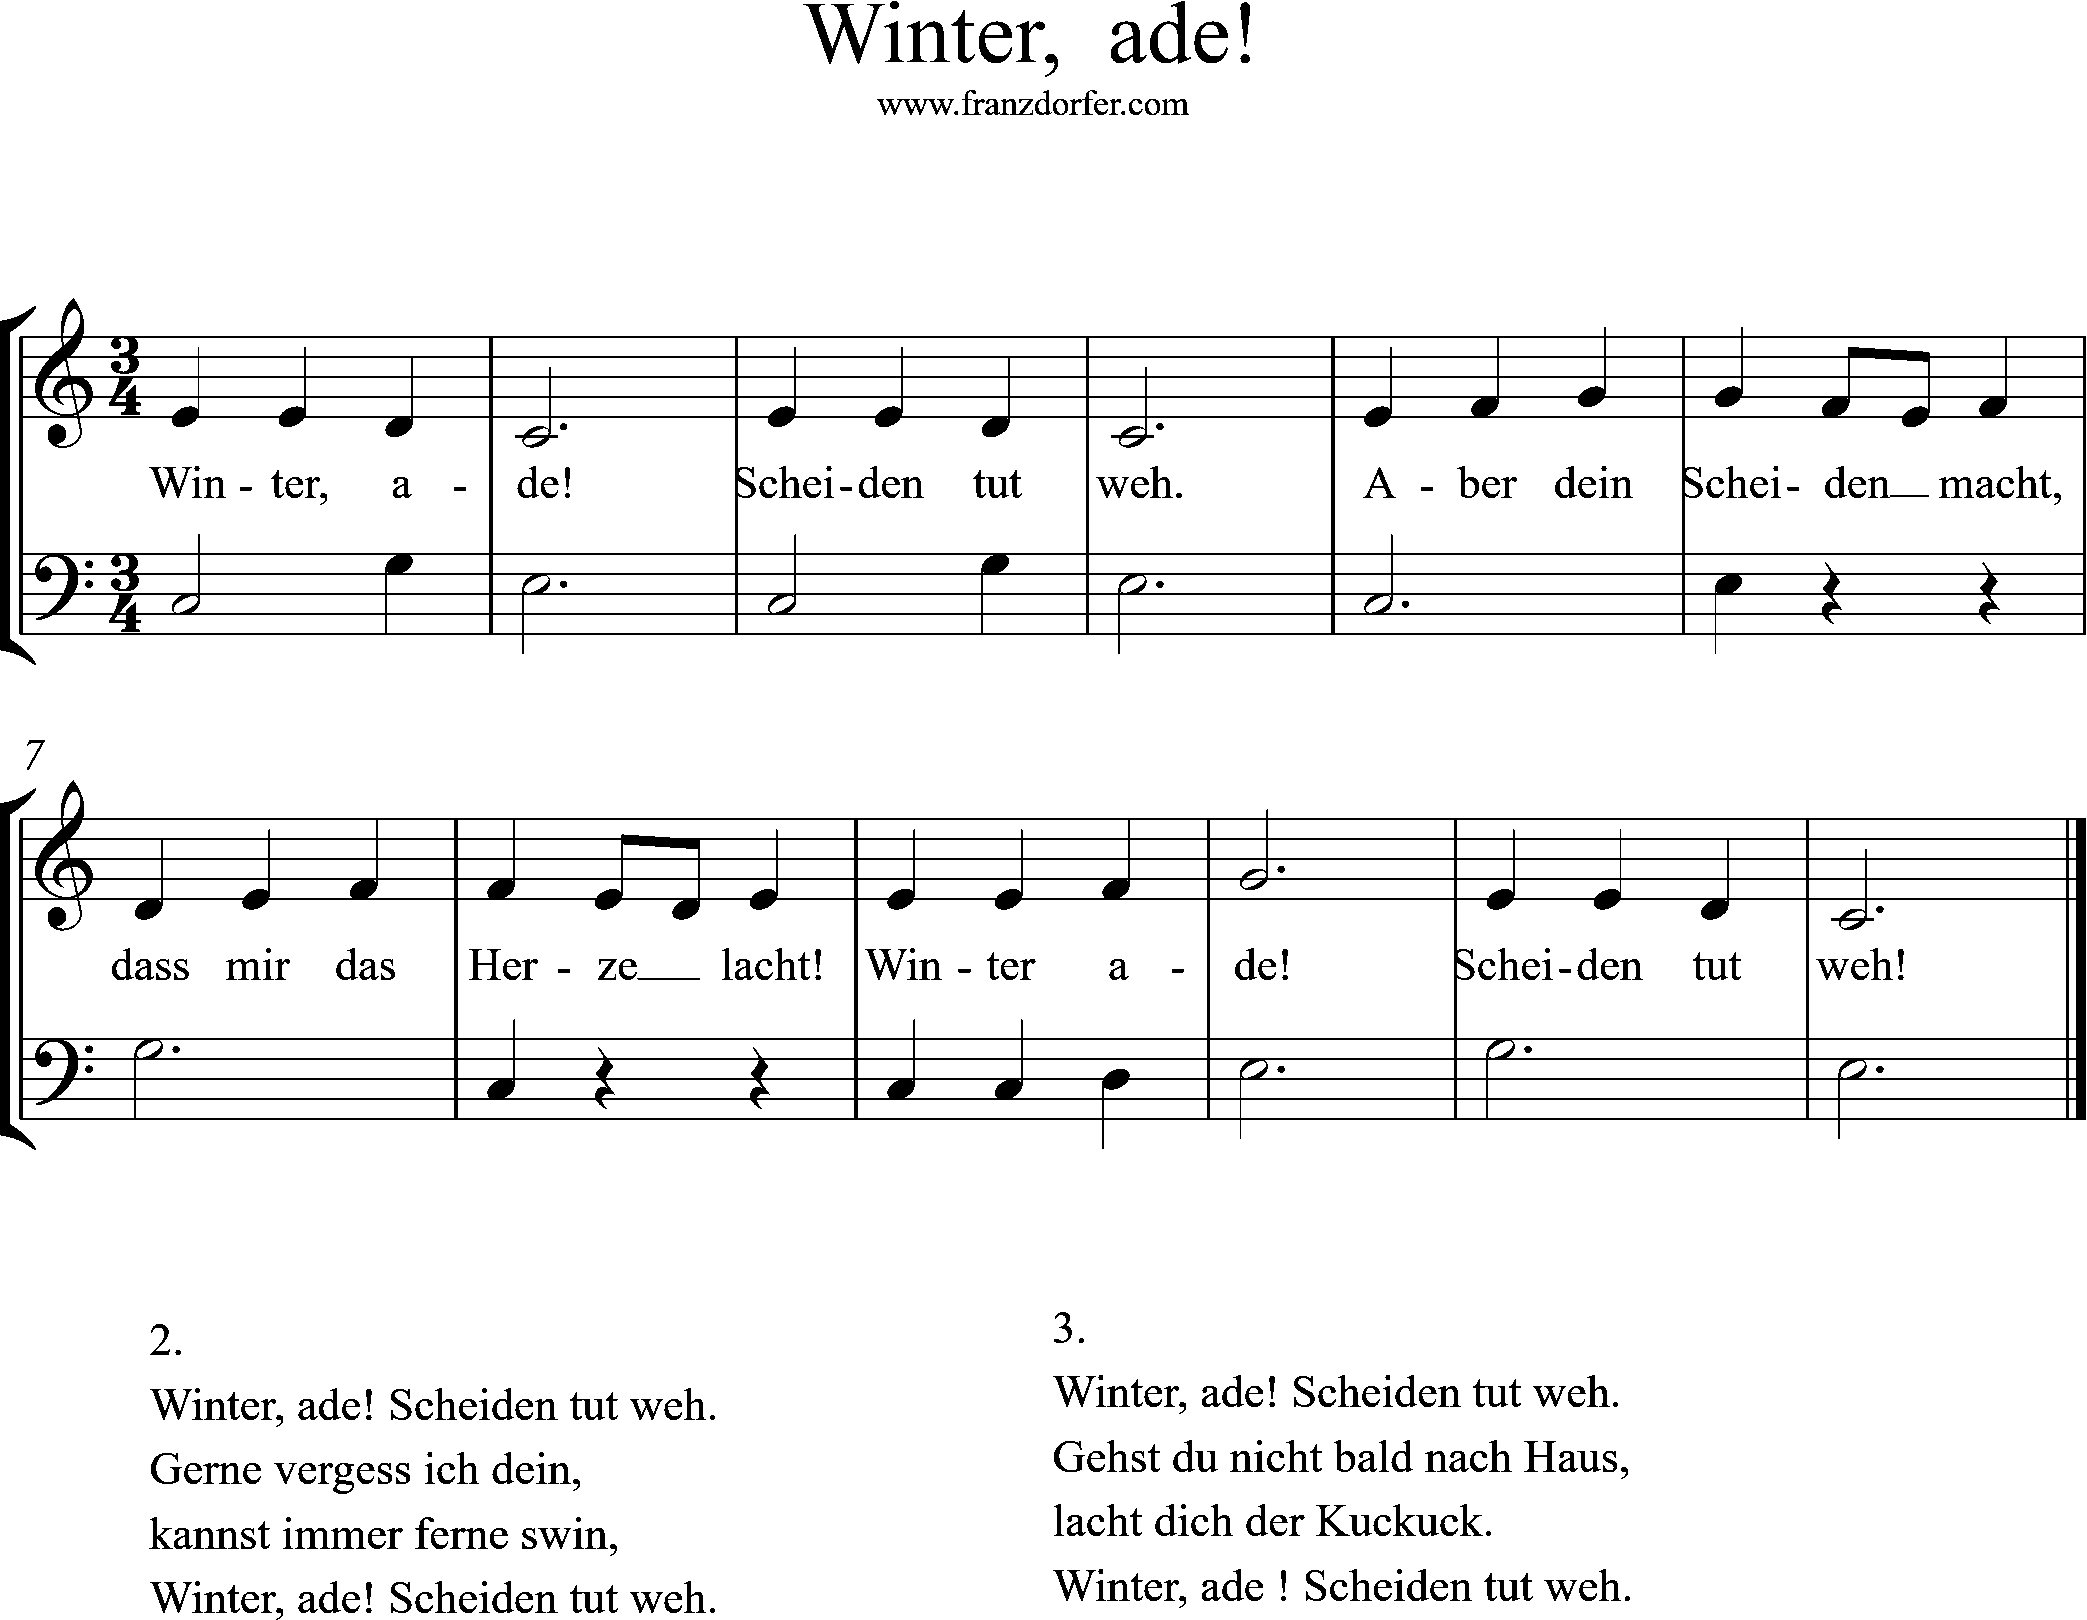 klaviernoten, Winter ade, C-Dur>>>